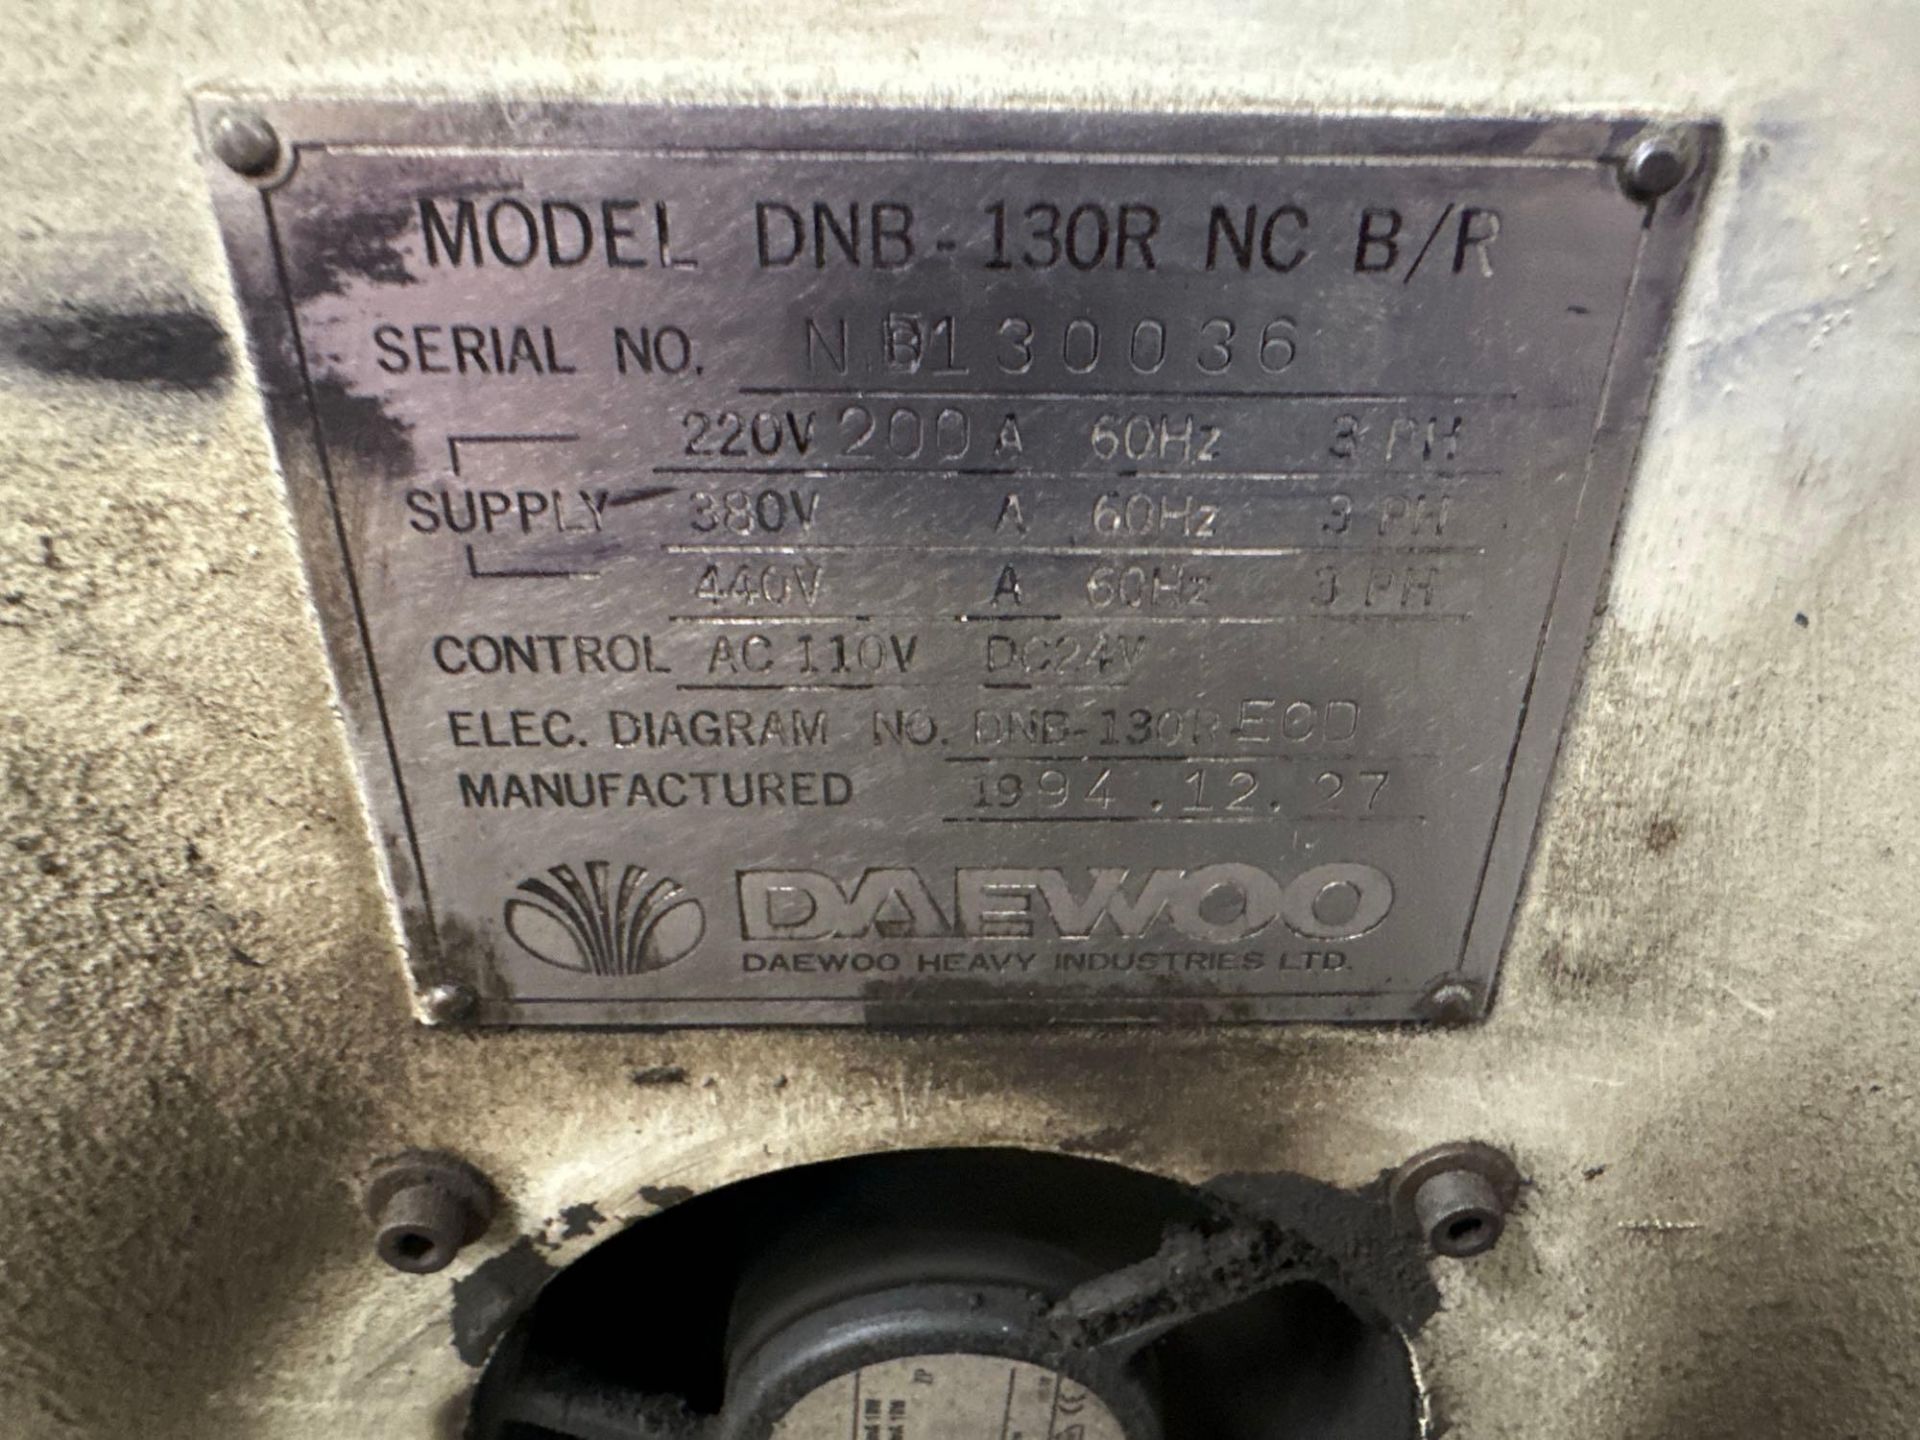 5" Daewoo DNB-130R, Fanuc 15M, 79" x 63" x 43" trvls, 1 deg Rotary Table, 2000 RPM, s/n NB130036, 19 - Image 11 of 11